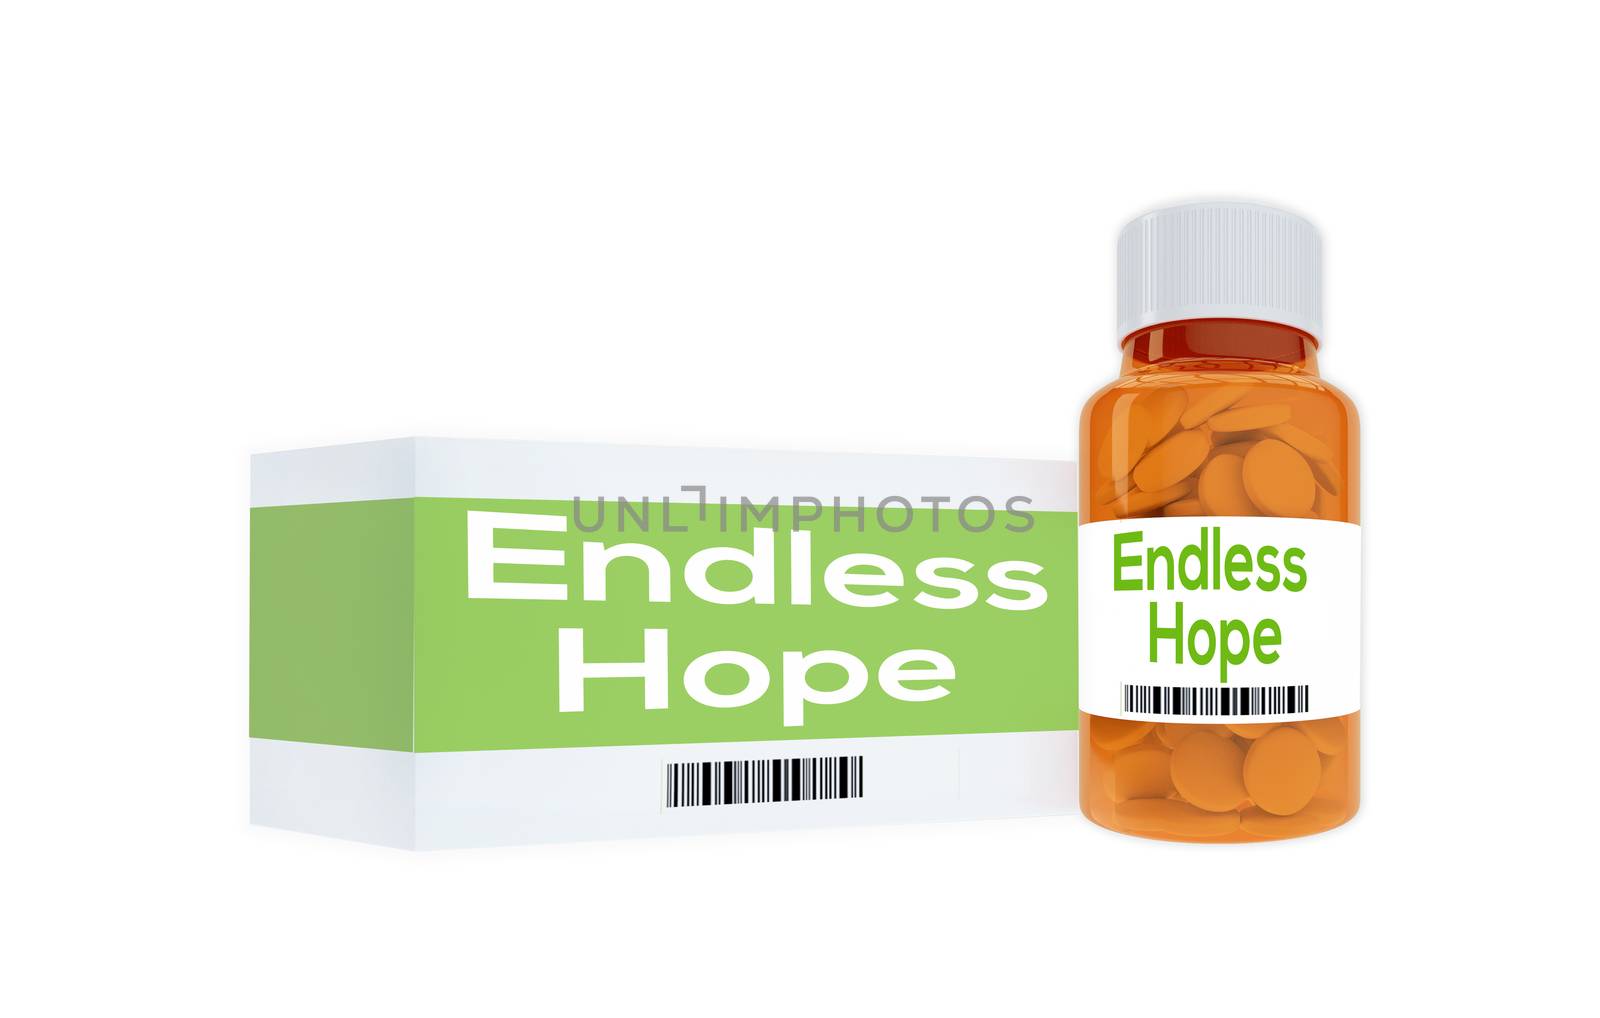 3D illustration of "Endless Hope" title on pill bottle, isolated on white.